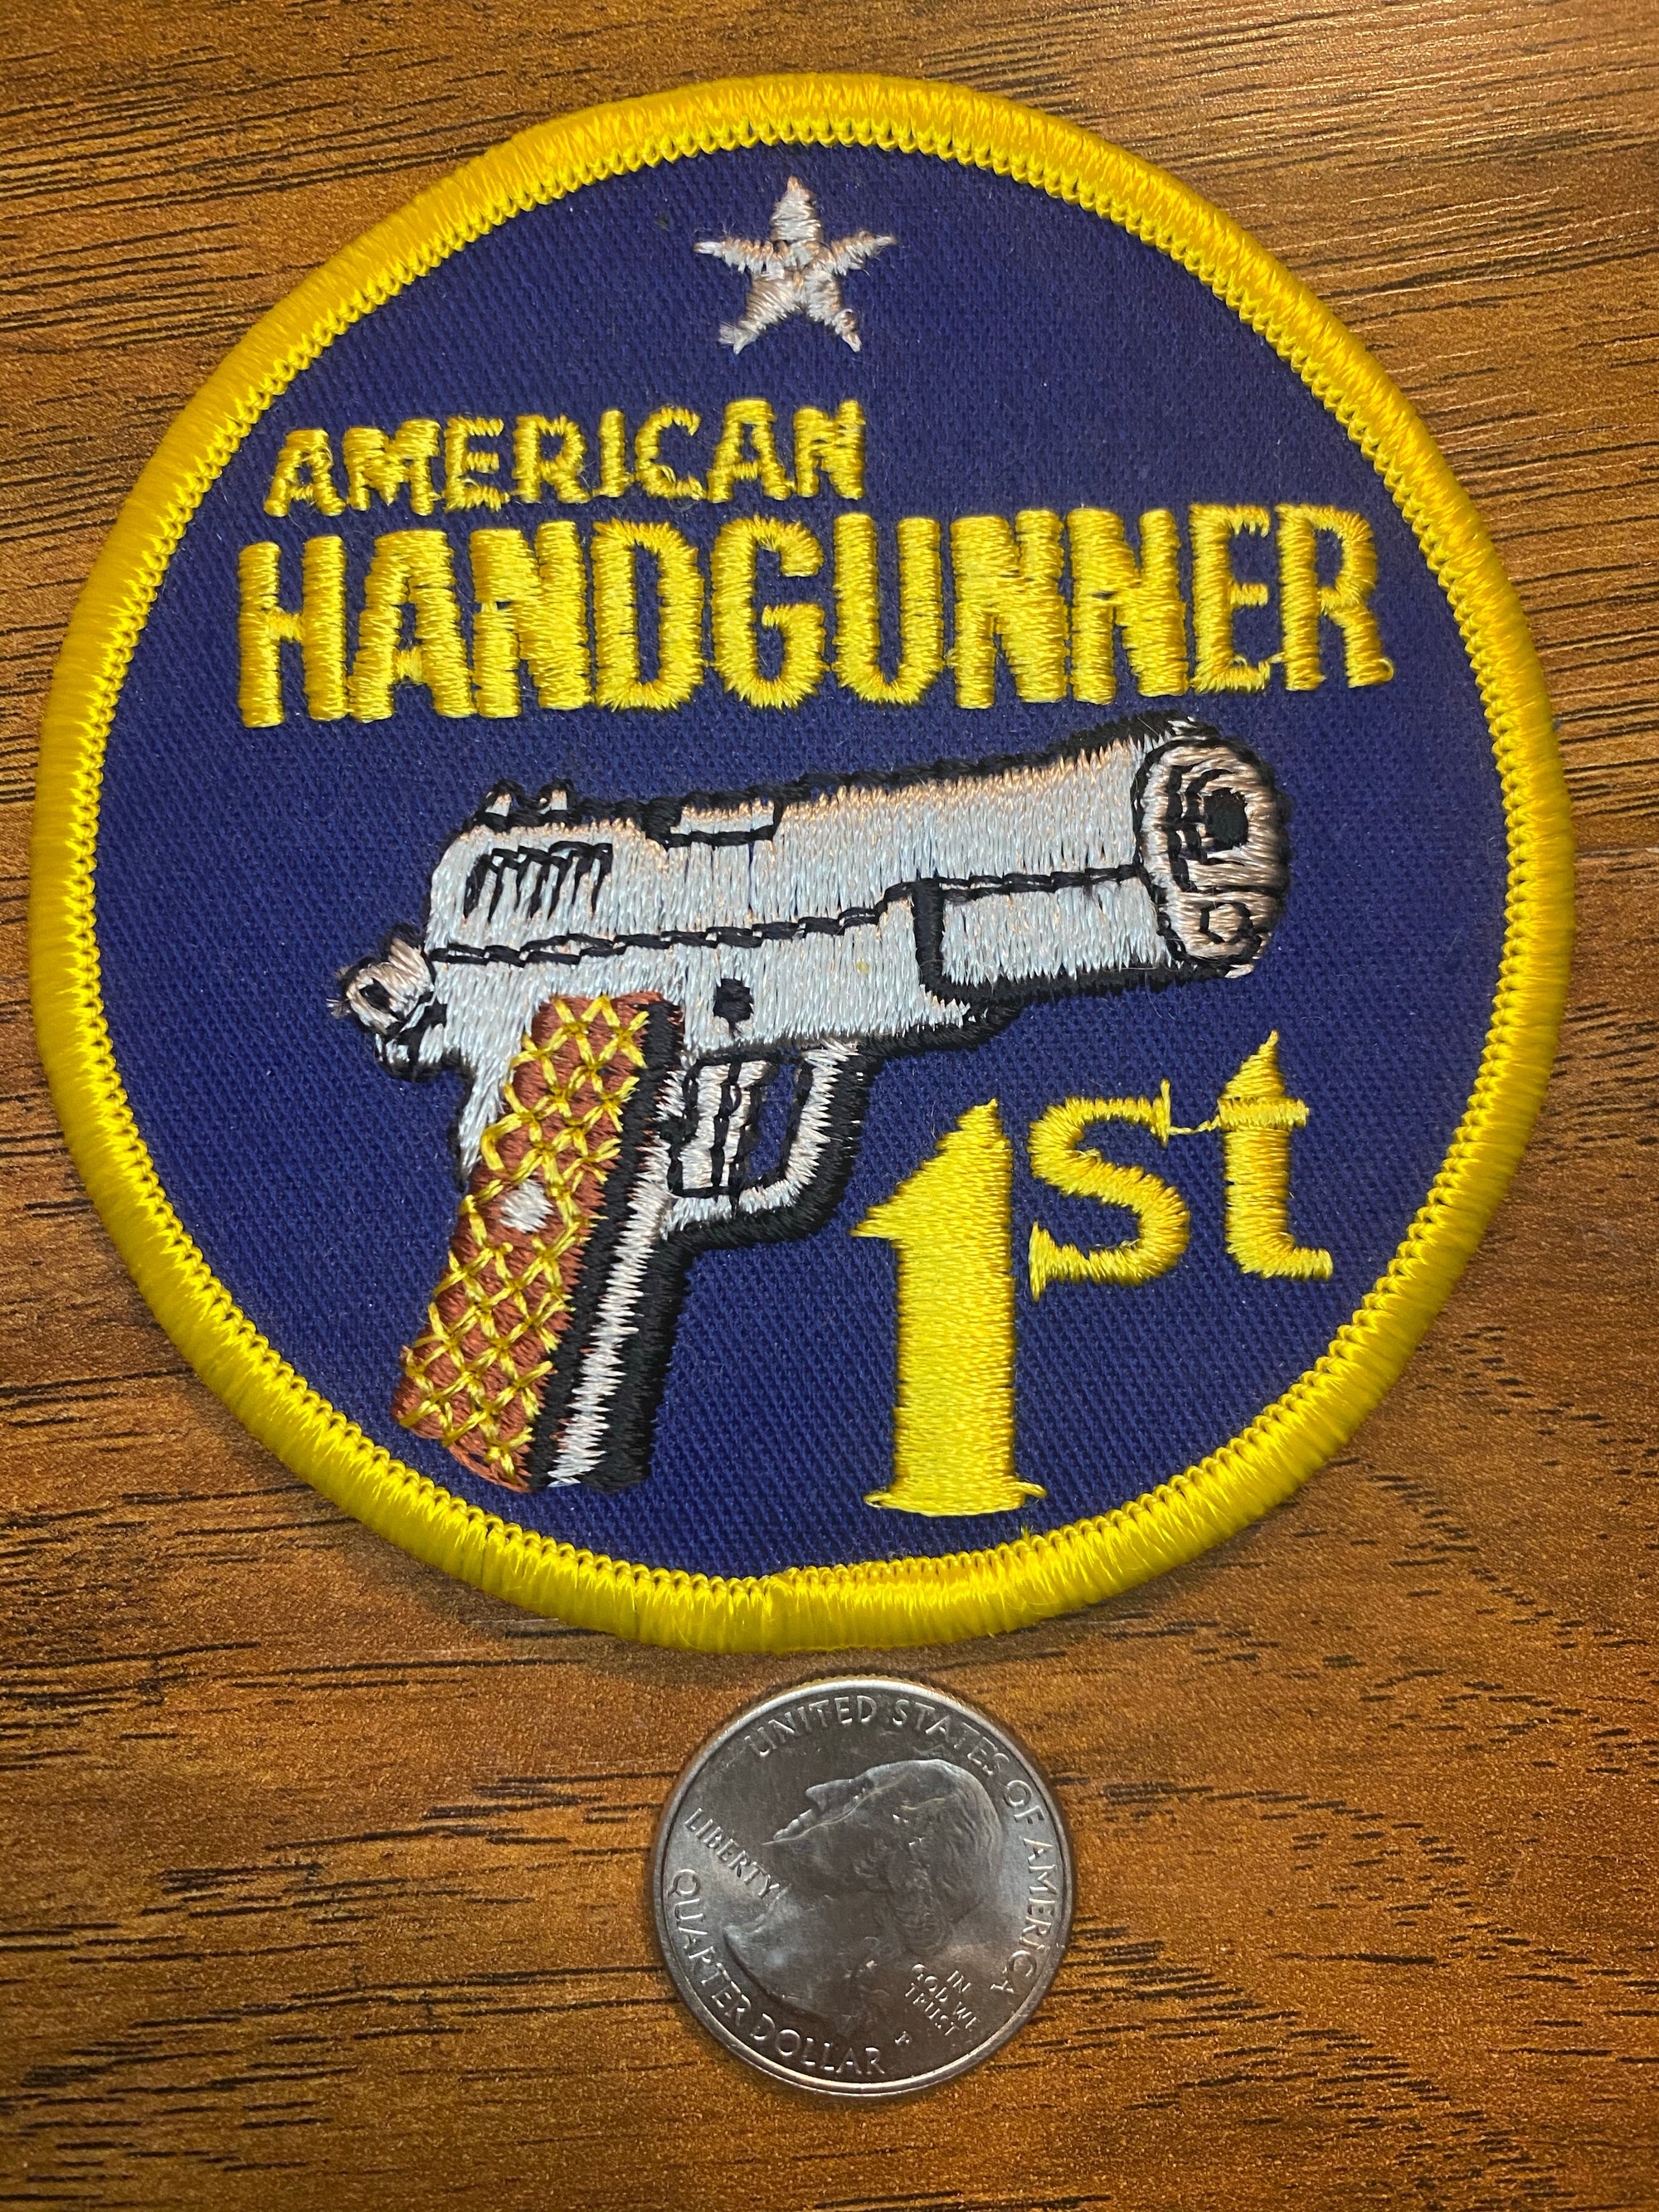 Vintage American Handgunner